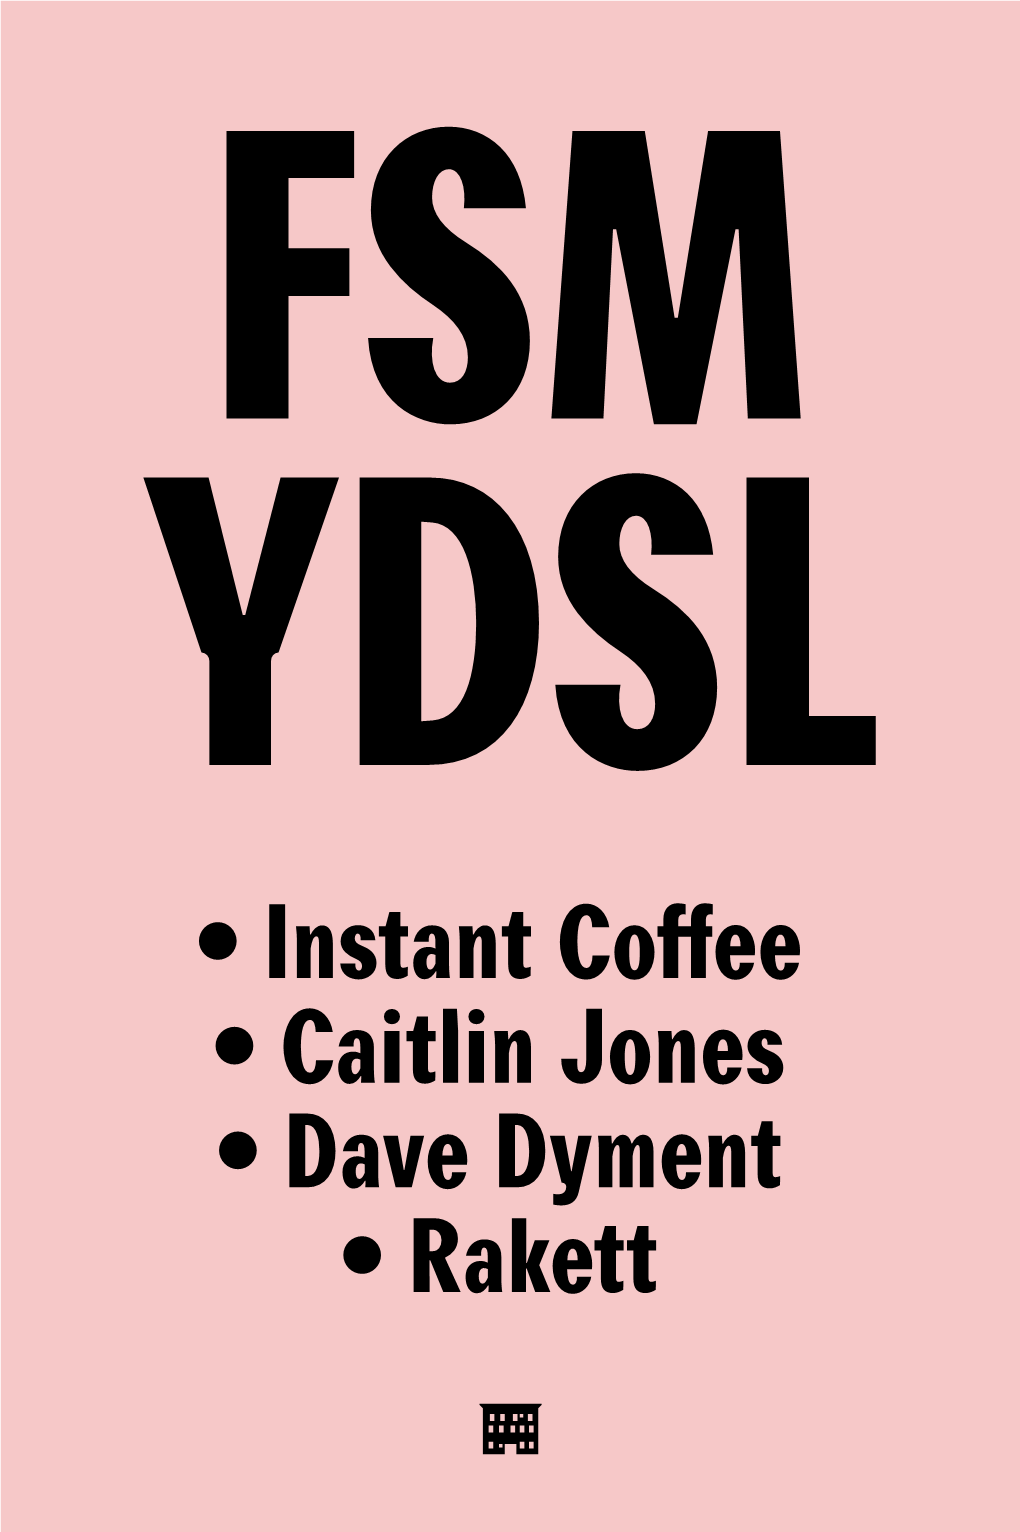 Instant Coffee • Caitlin Jones • Dave Dyment • Rakett